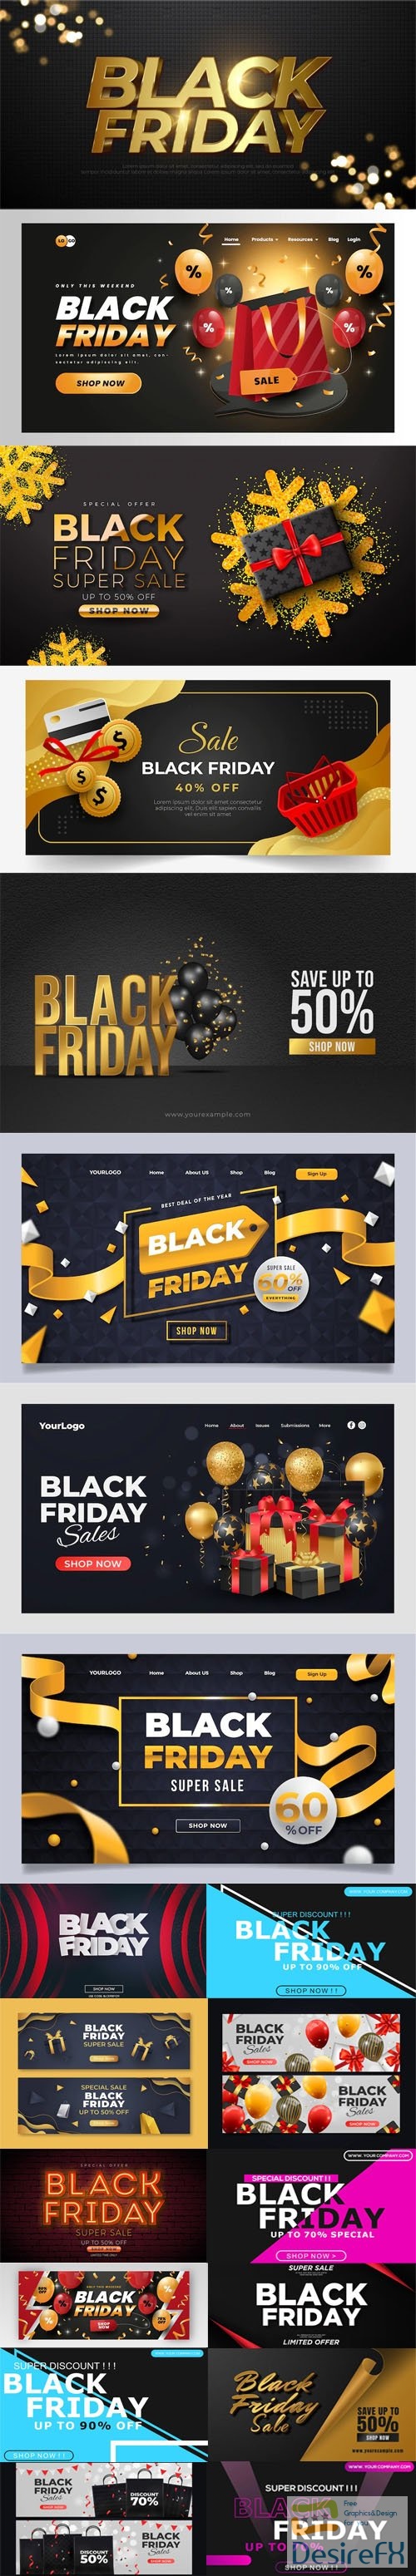 Black Friday - 20 Modern Web Banners Vector Templates Vol.2